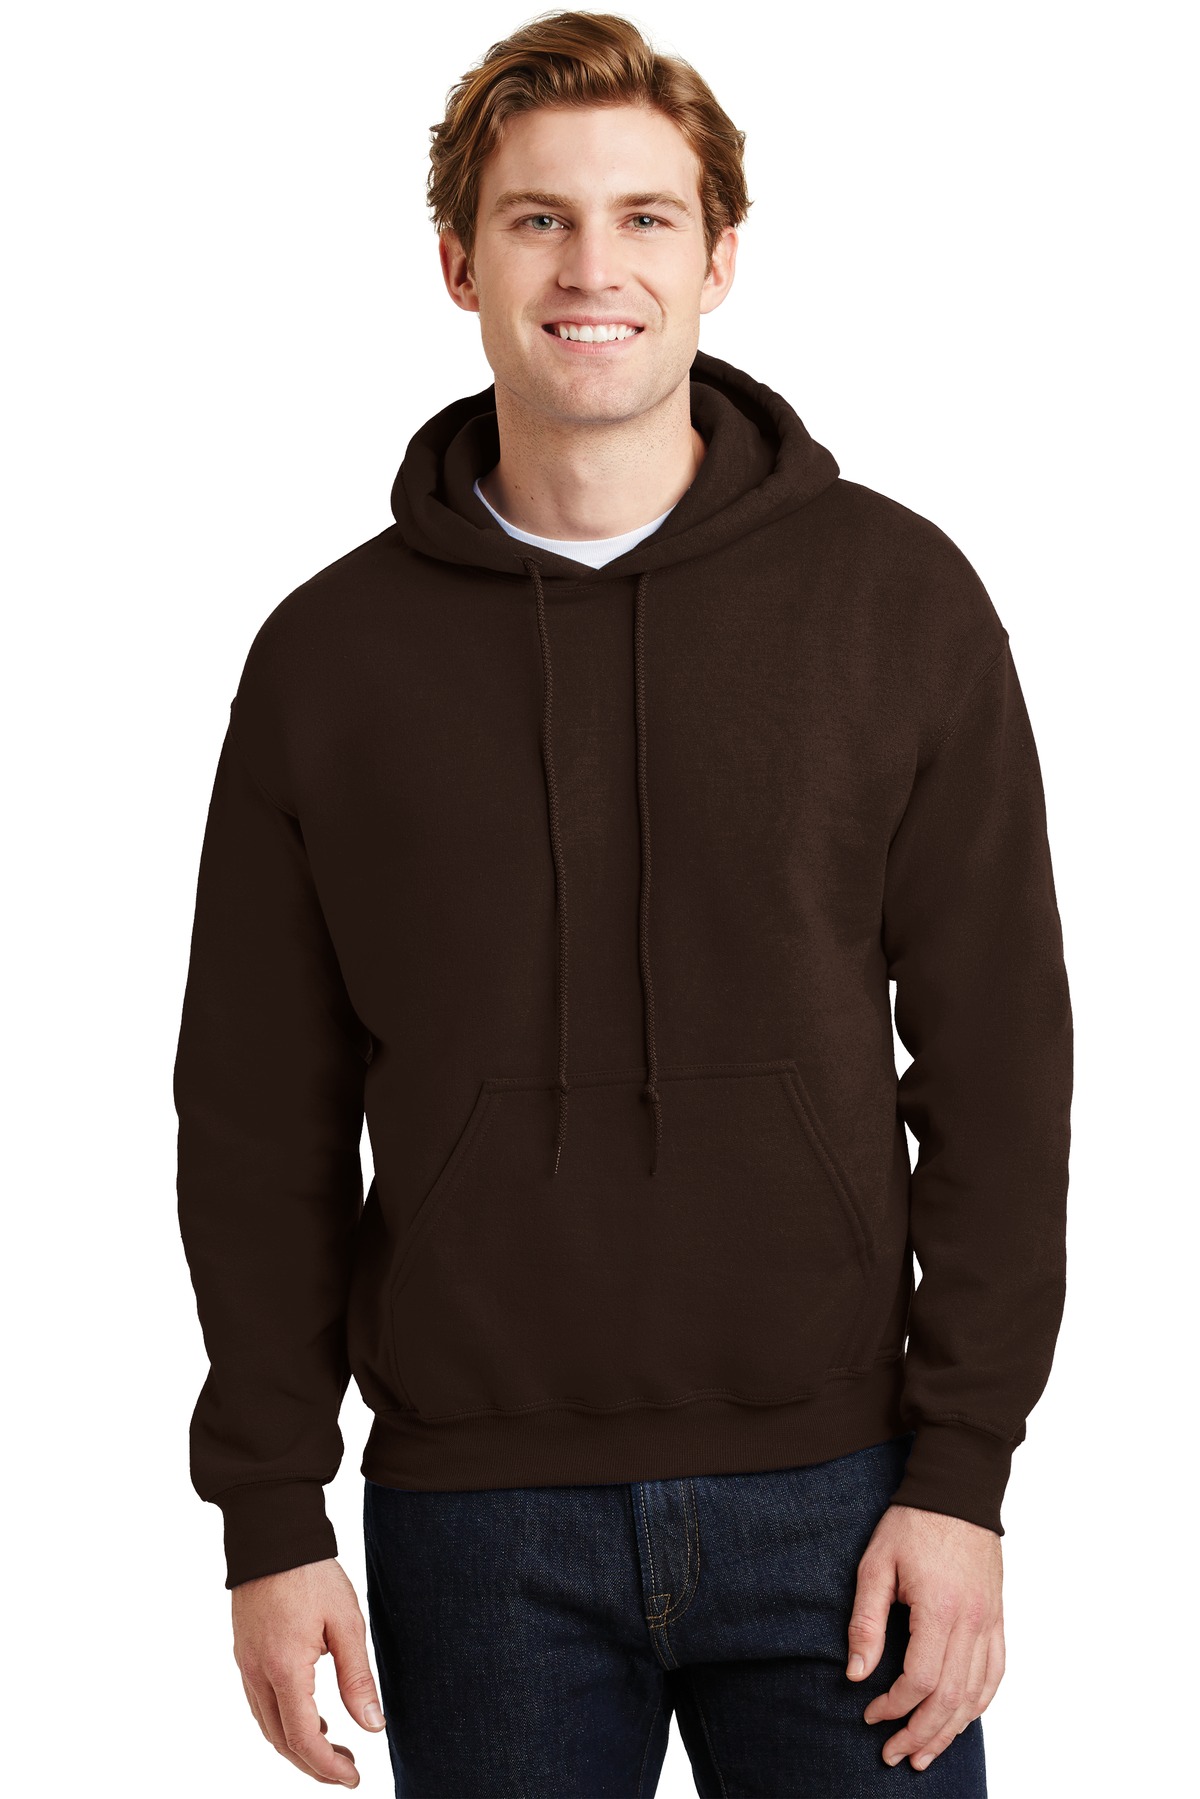 Gildan 1850 Heavy Blend 50/50 Hooded Sweatshirt 